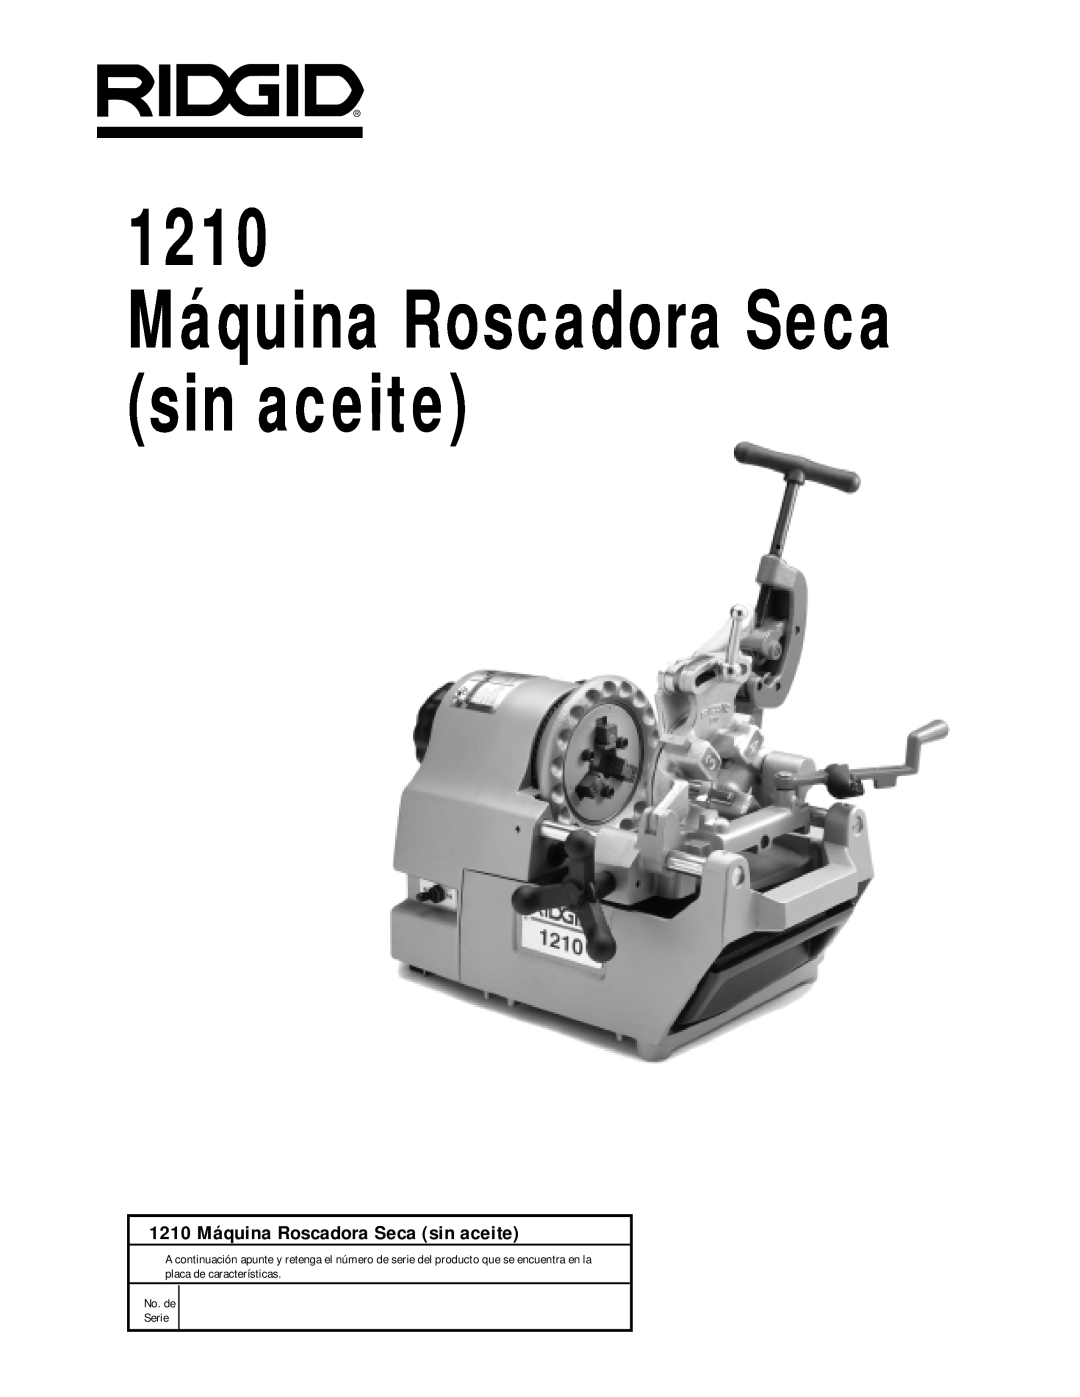 RIDGID manual 1210 Máquina Roscadora Seca sin aceite, No. de Serie 